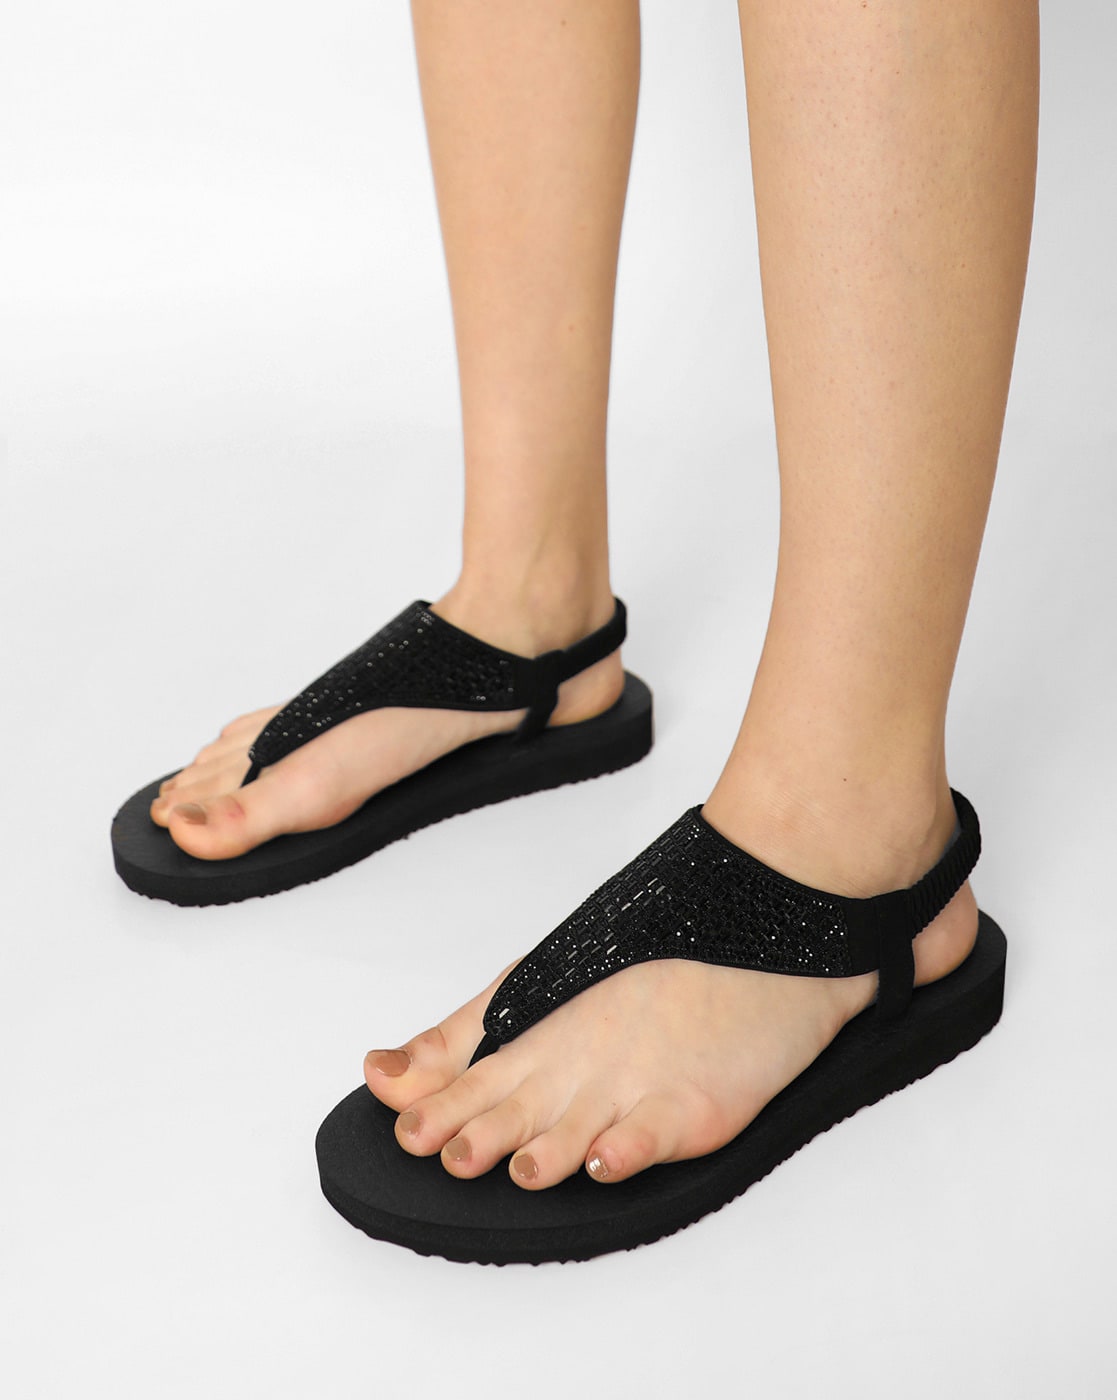 AJh,skechers sandals for flat feet 